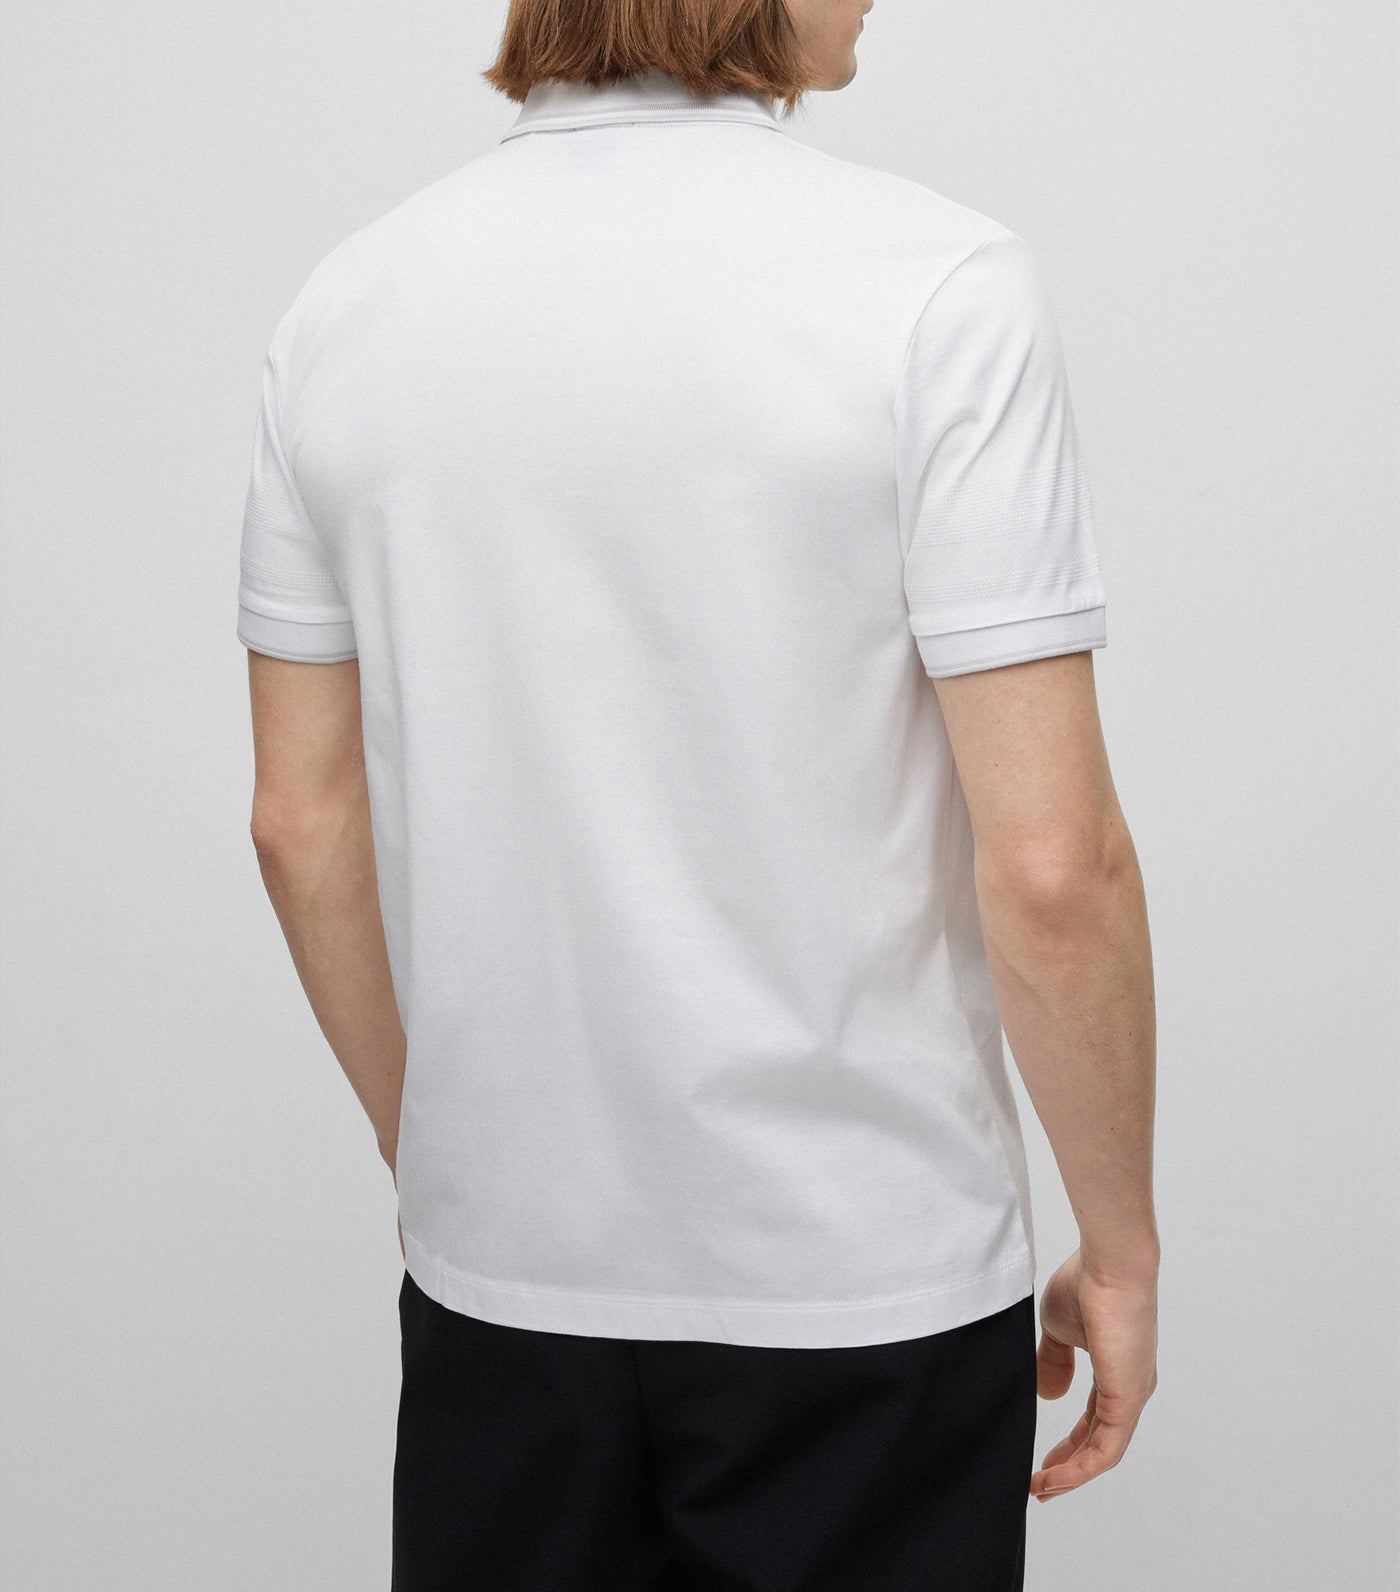 Phillipson 115 Polo Shirt White